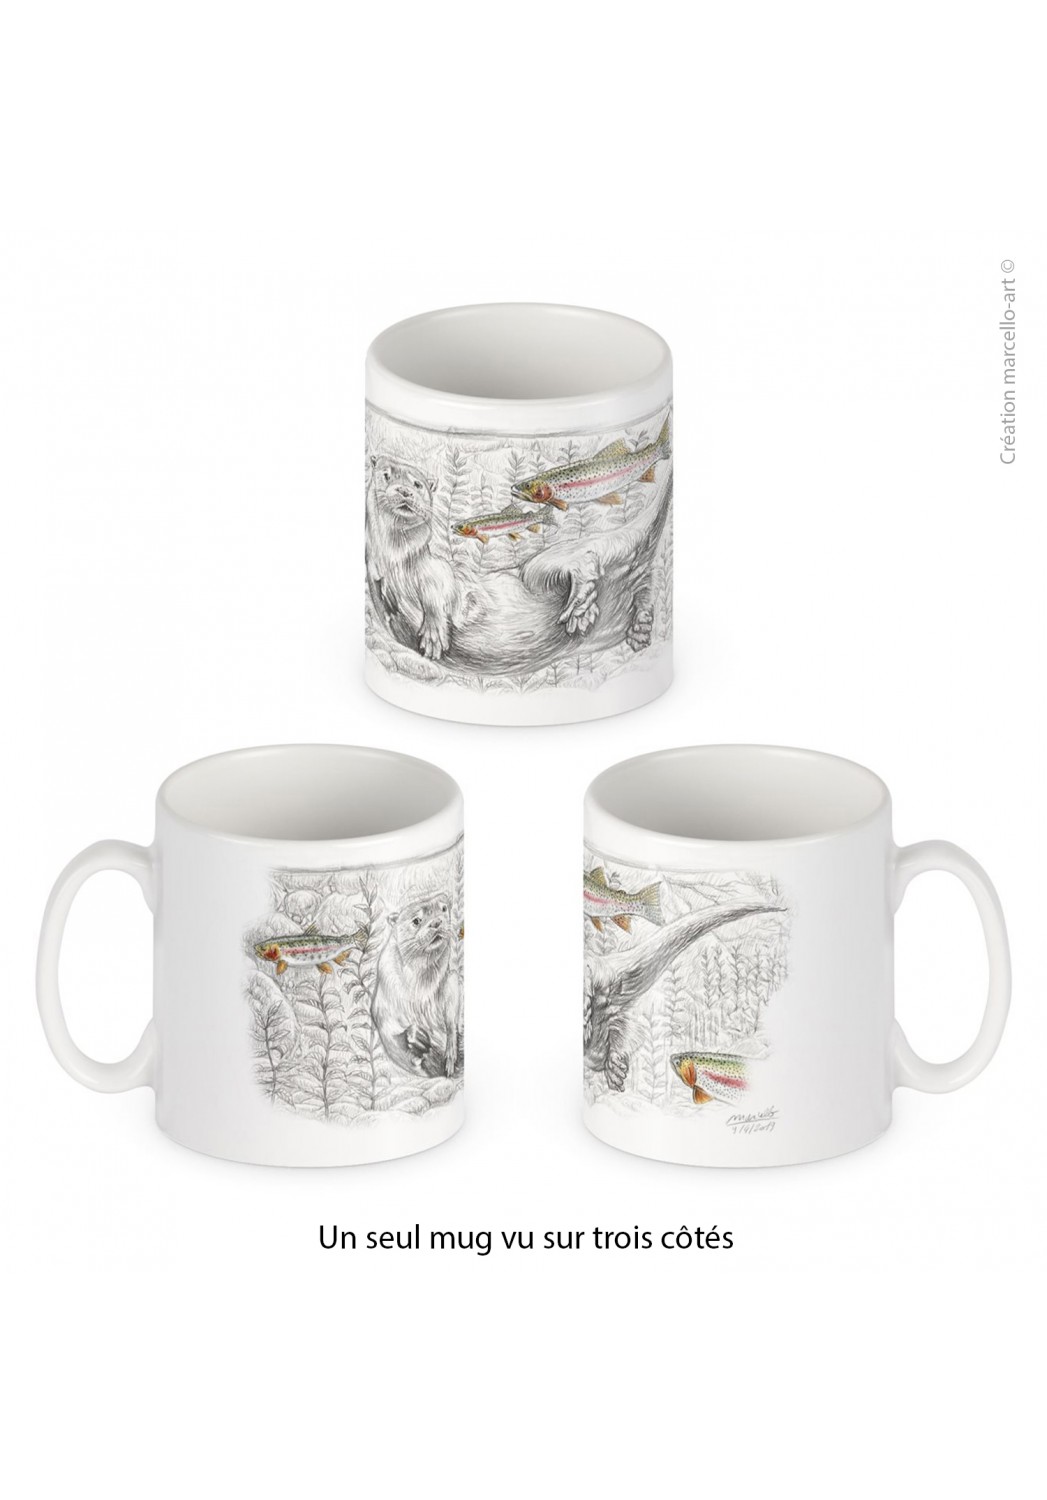 Marcello-art: Decoration accessoiries Porcelain mug 393 otter